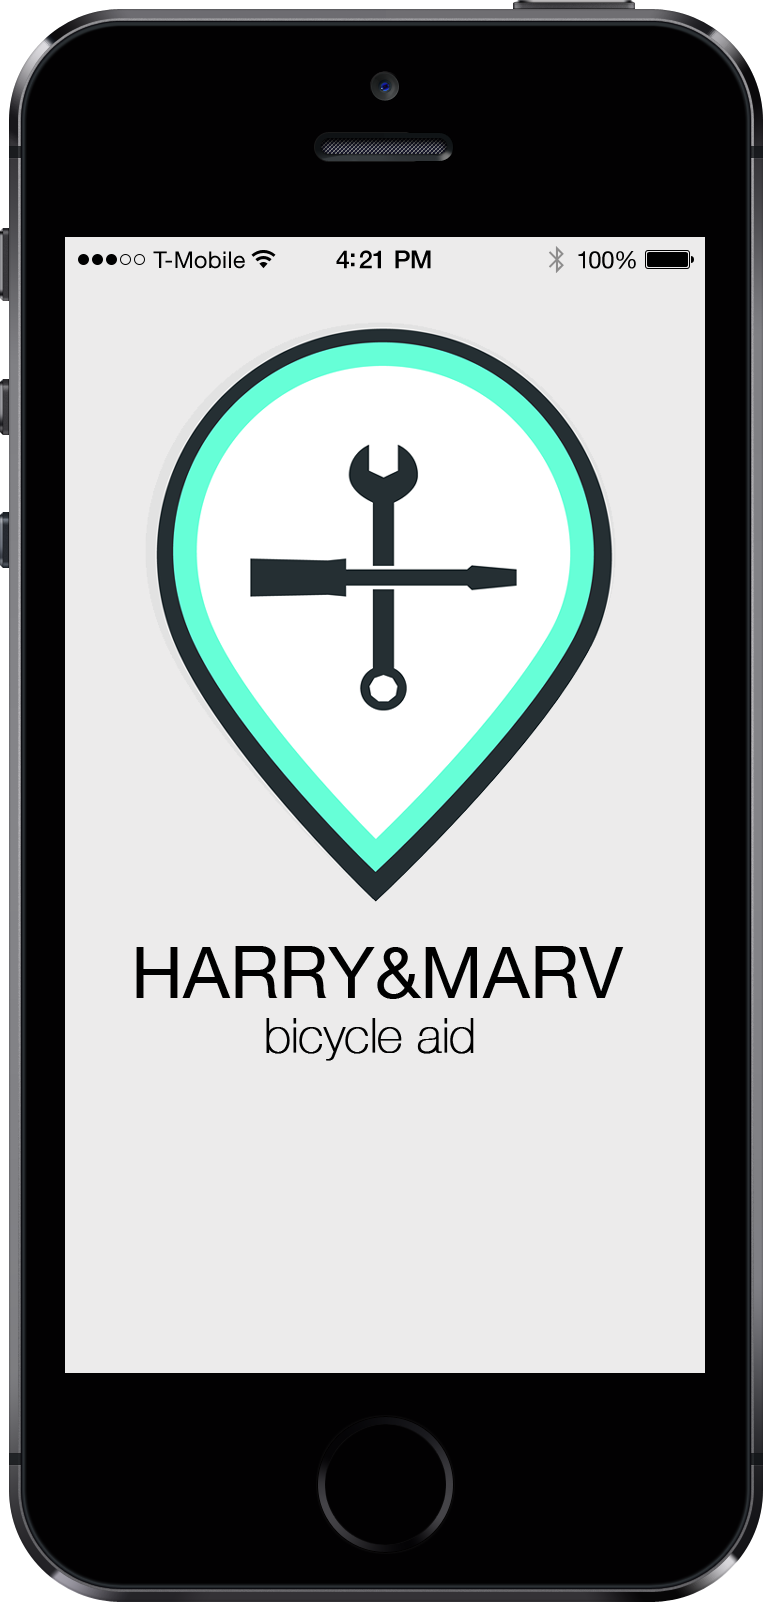 Harry&Marv bicycle aid startet Crowdfunding